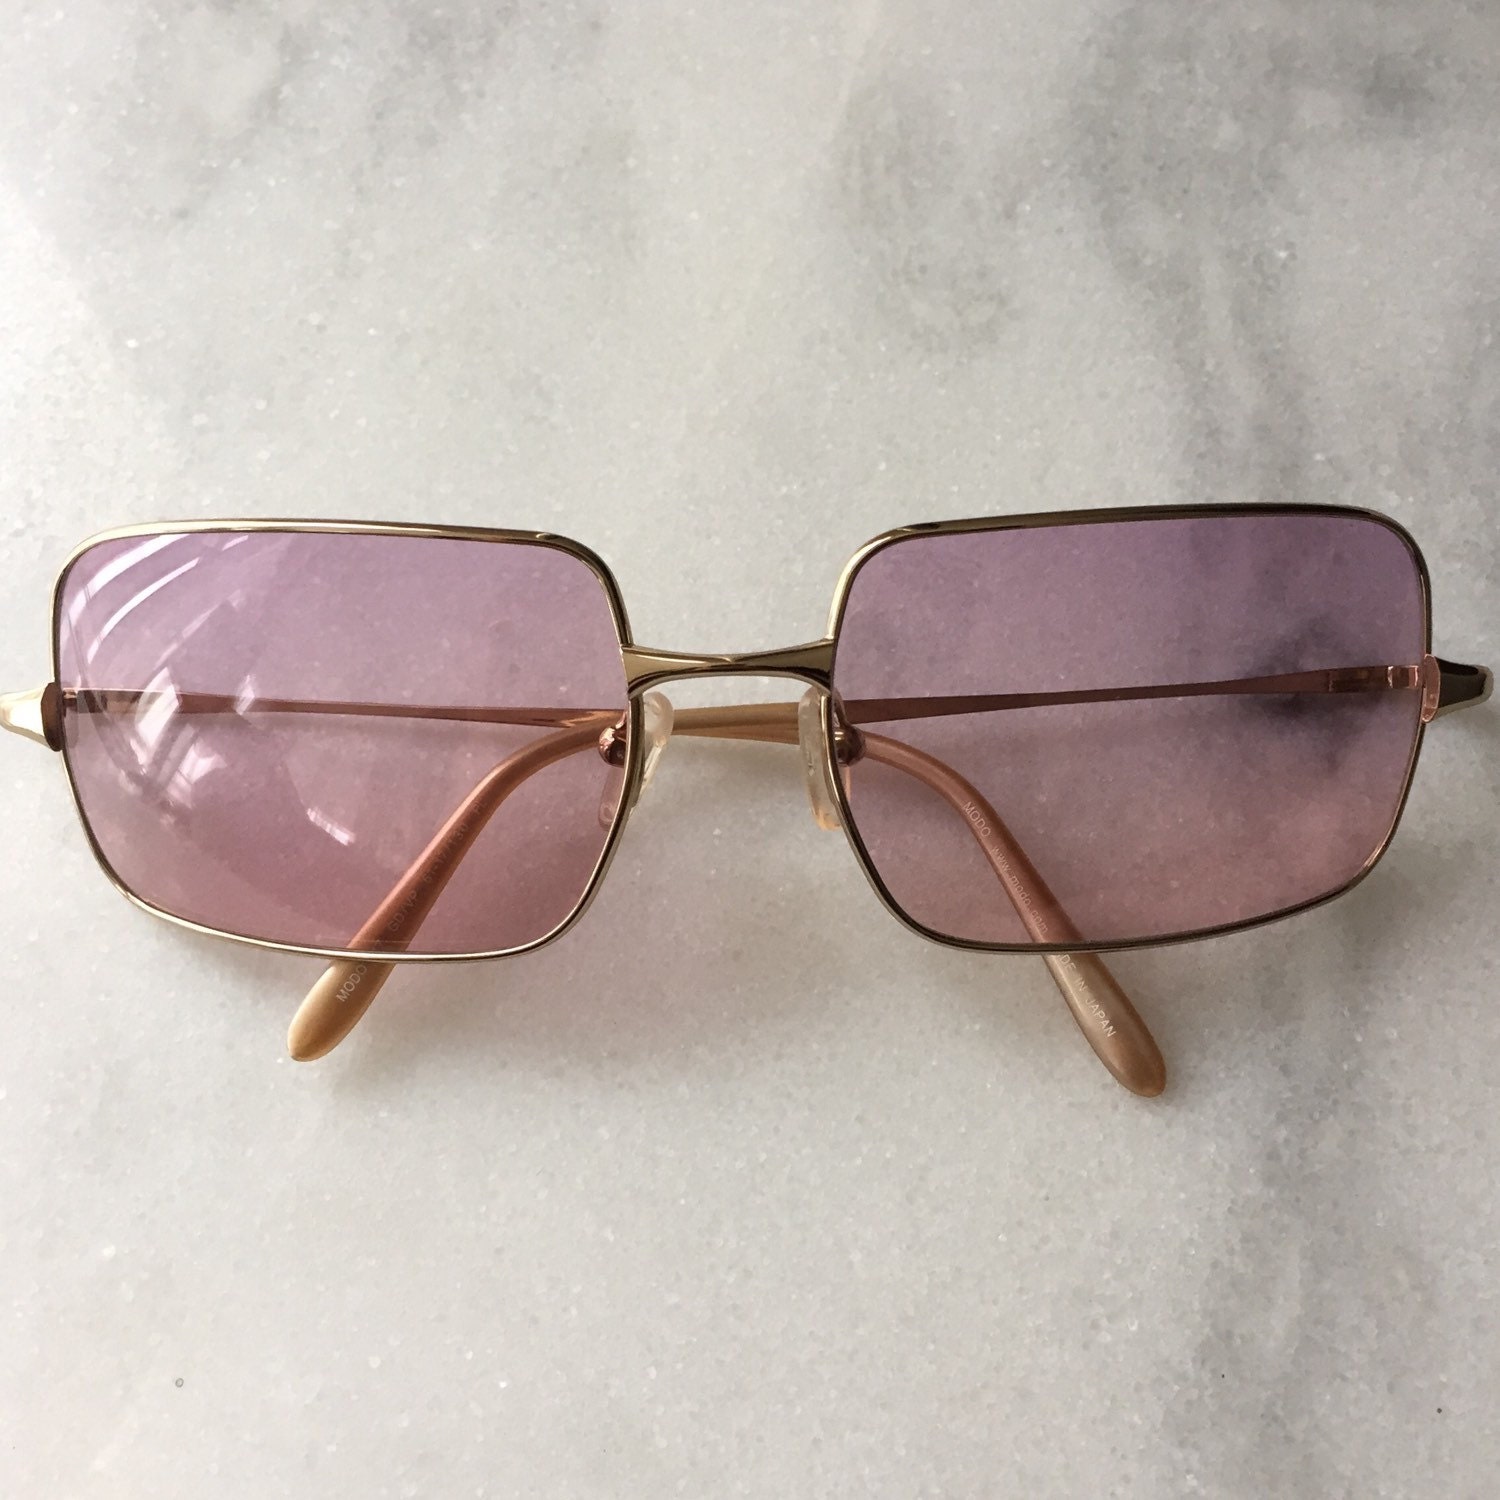 Vintage Sunglasses Rectangular Retro Gold By Lookeyewear On Etsy